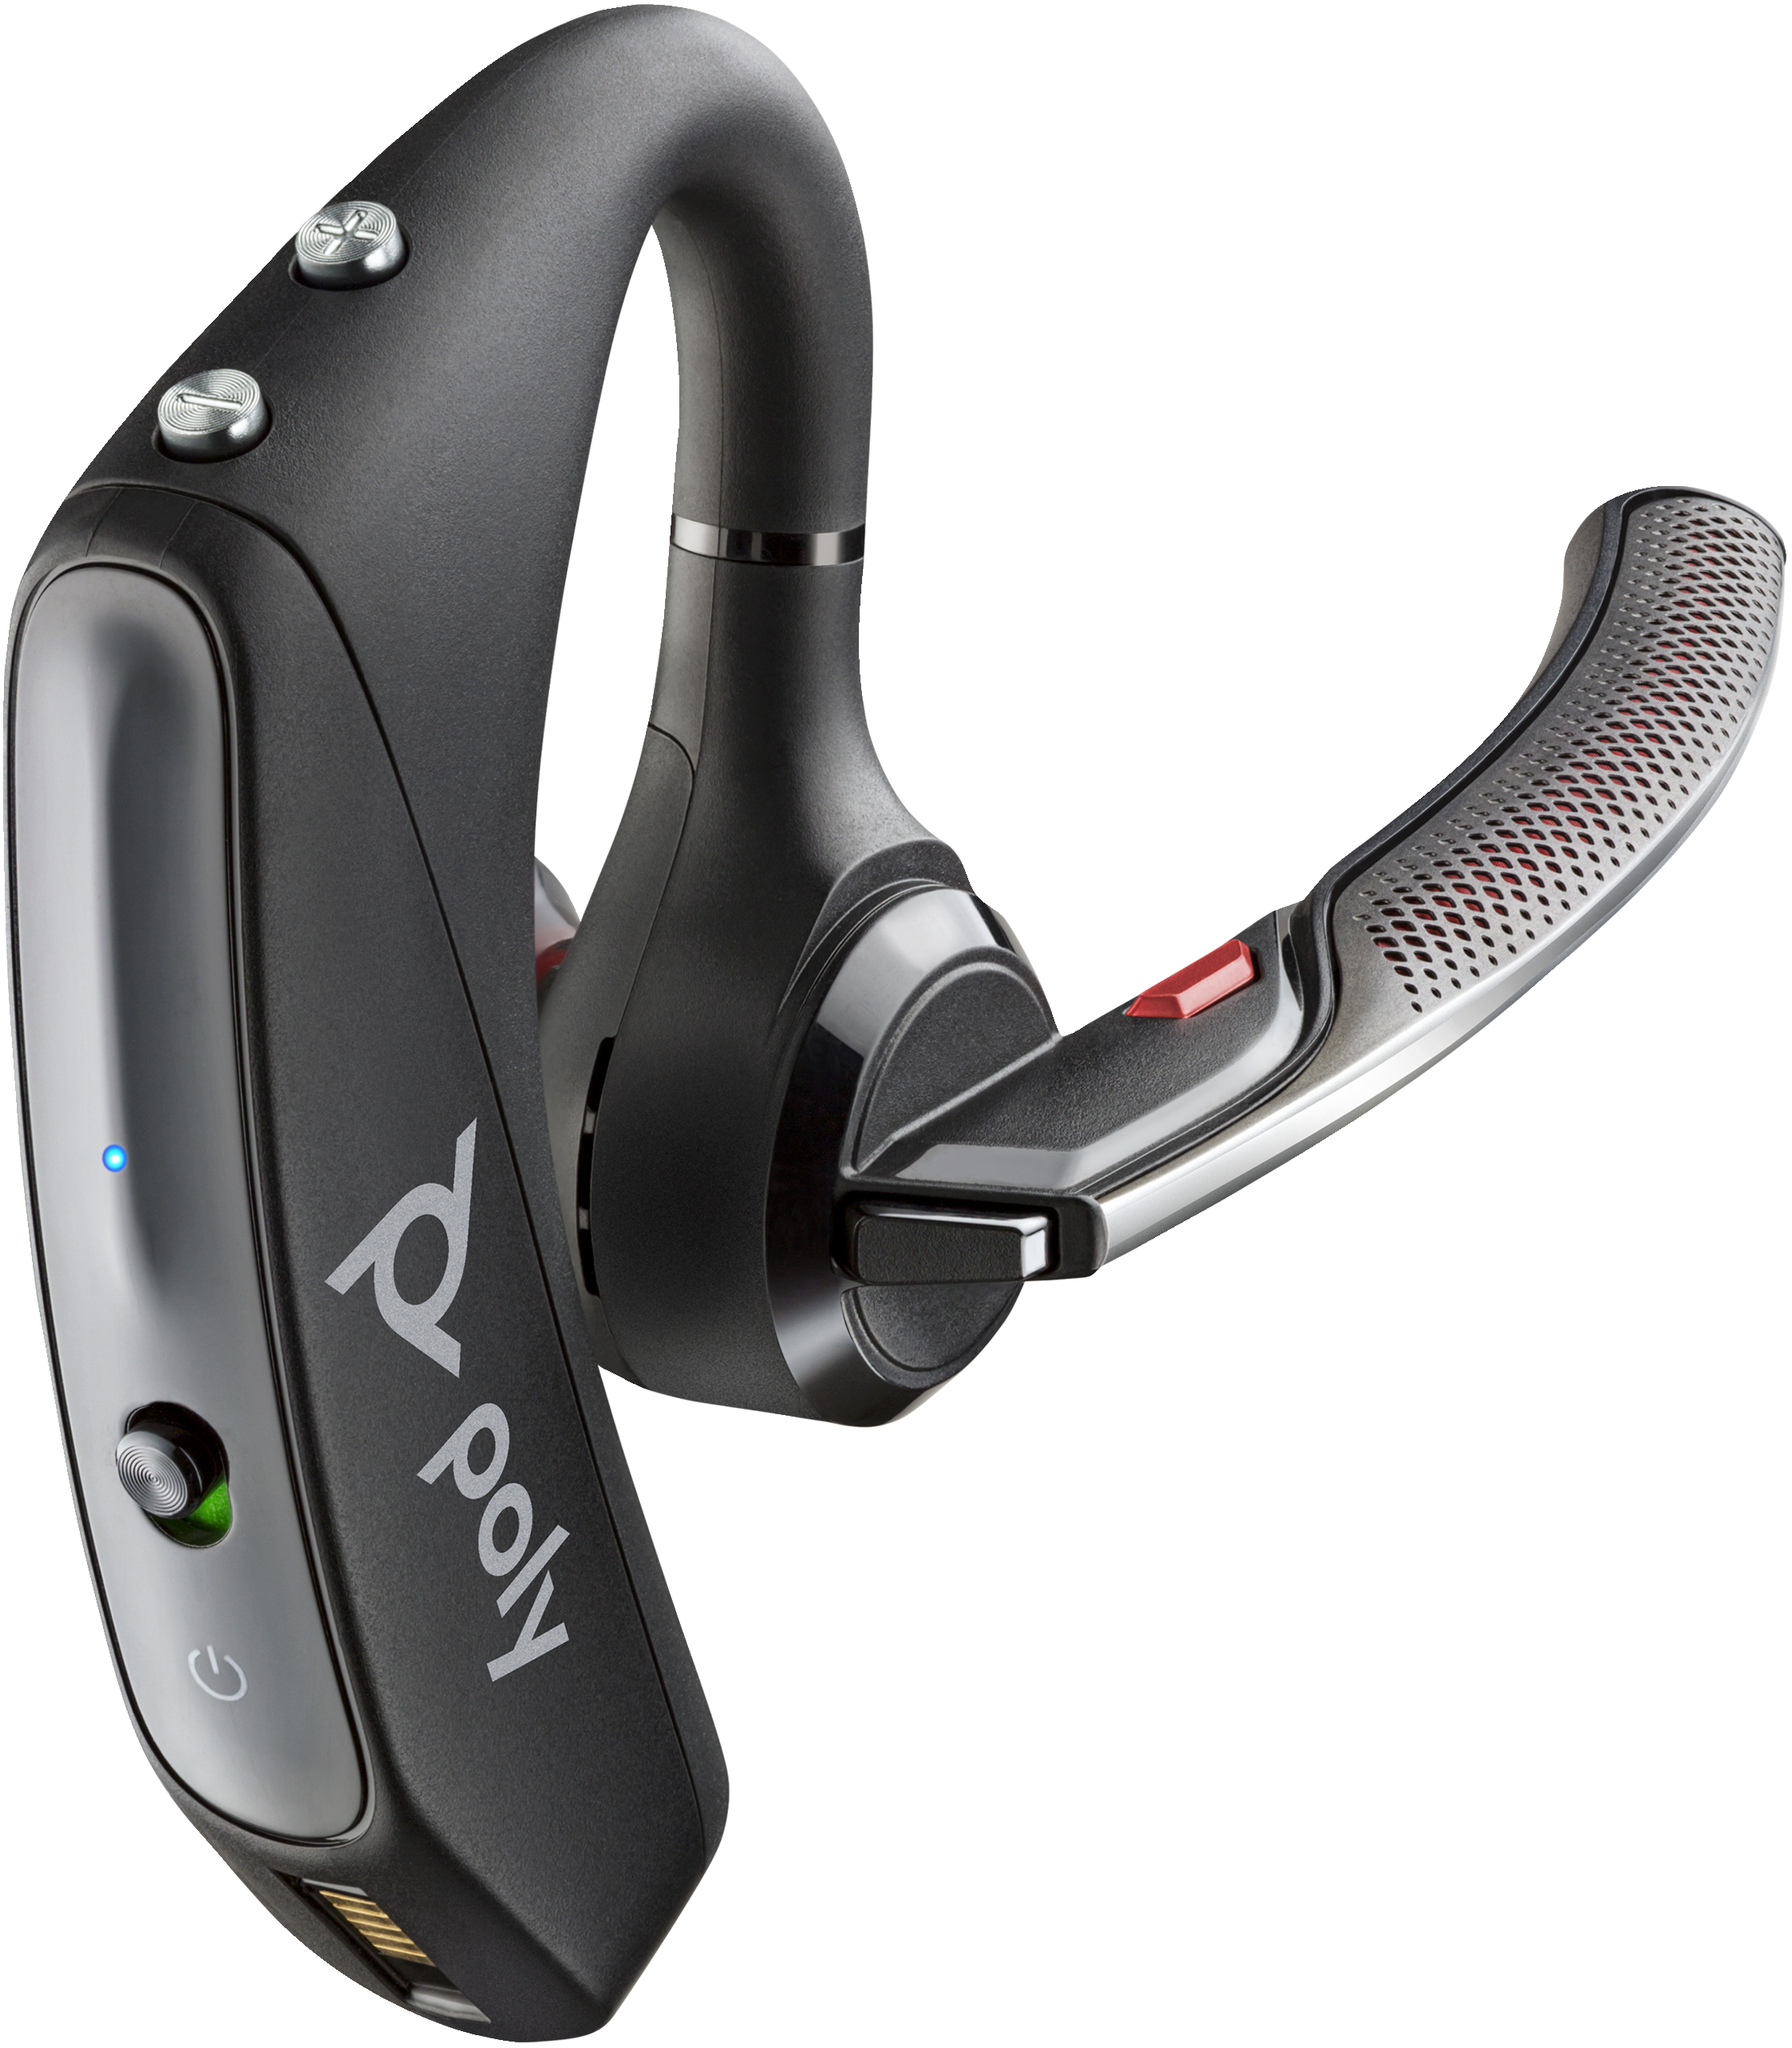 Plantronics Voyager 5200 Bluetooth headset